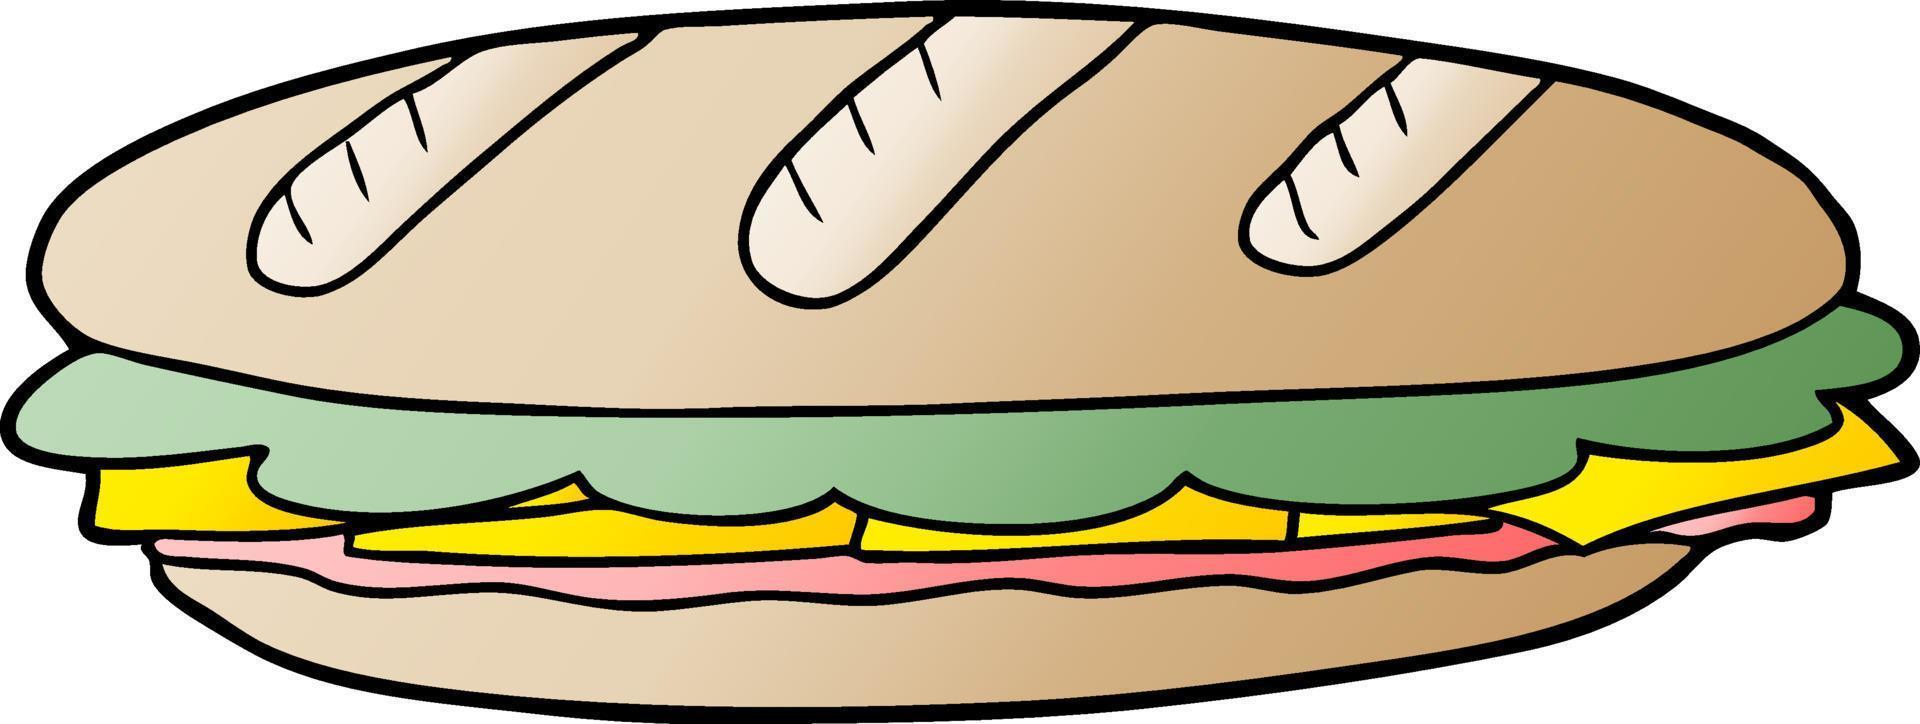 Cartoon-Baguette-Sandwich vektor